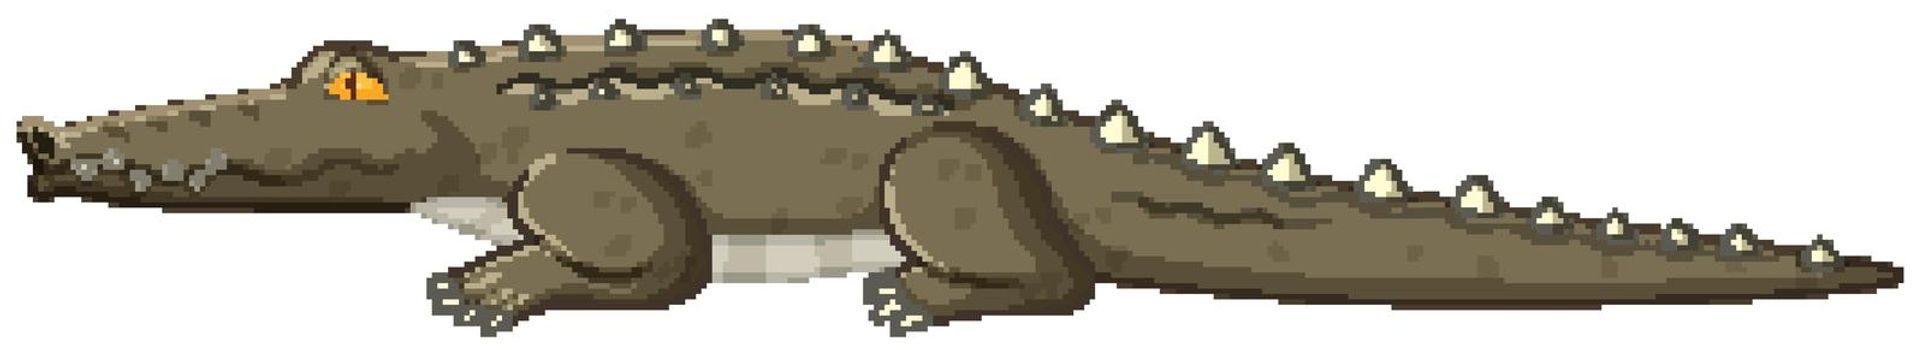 Alligator cartoon character isolated on white background